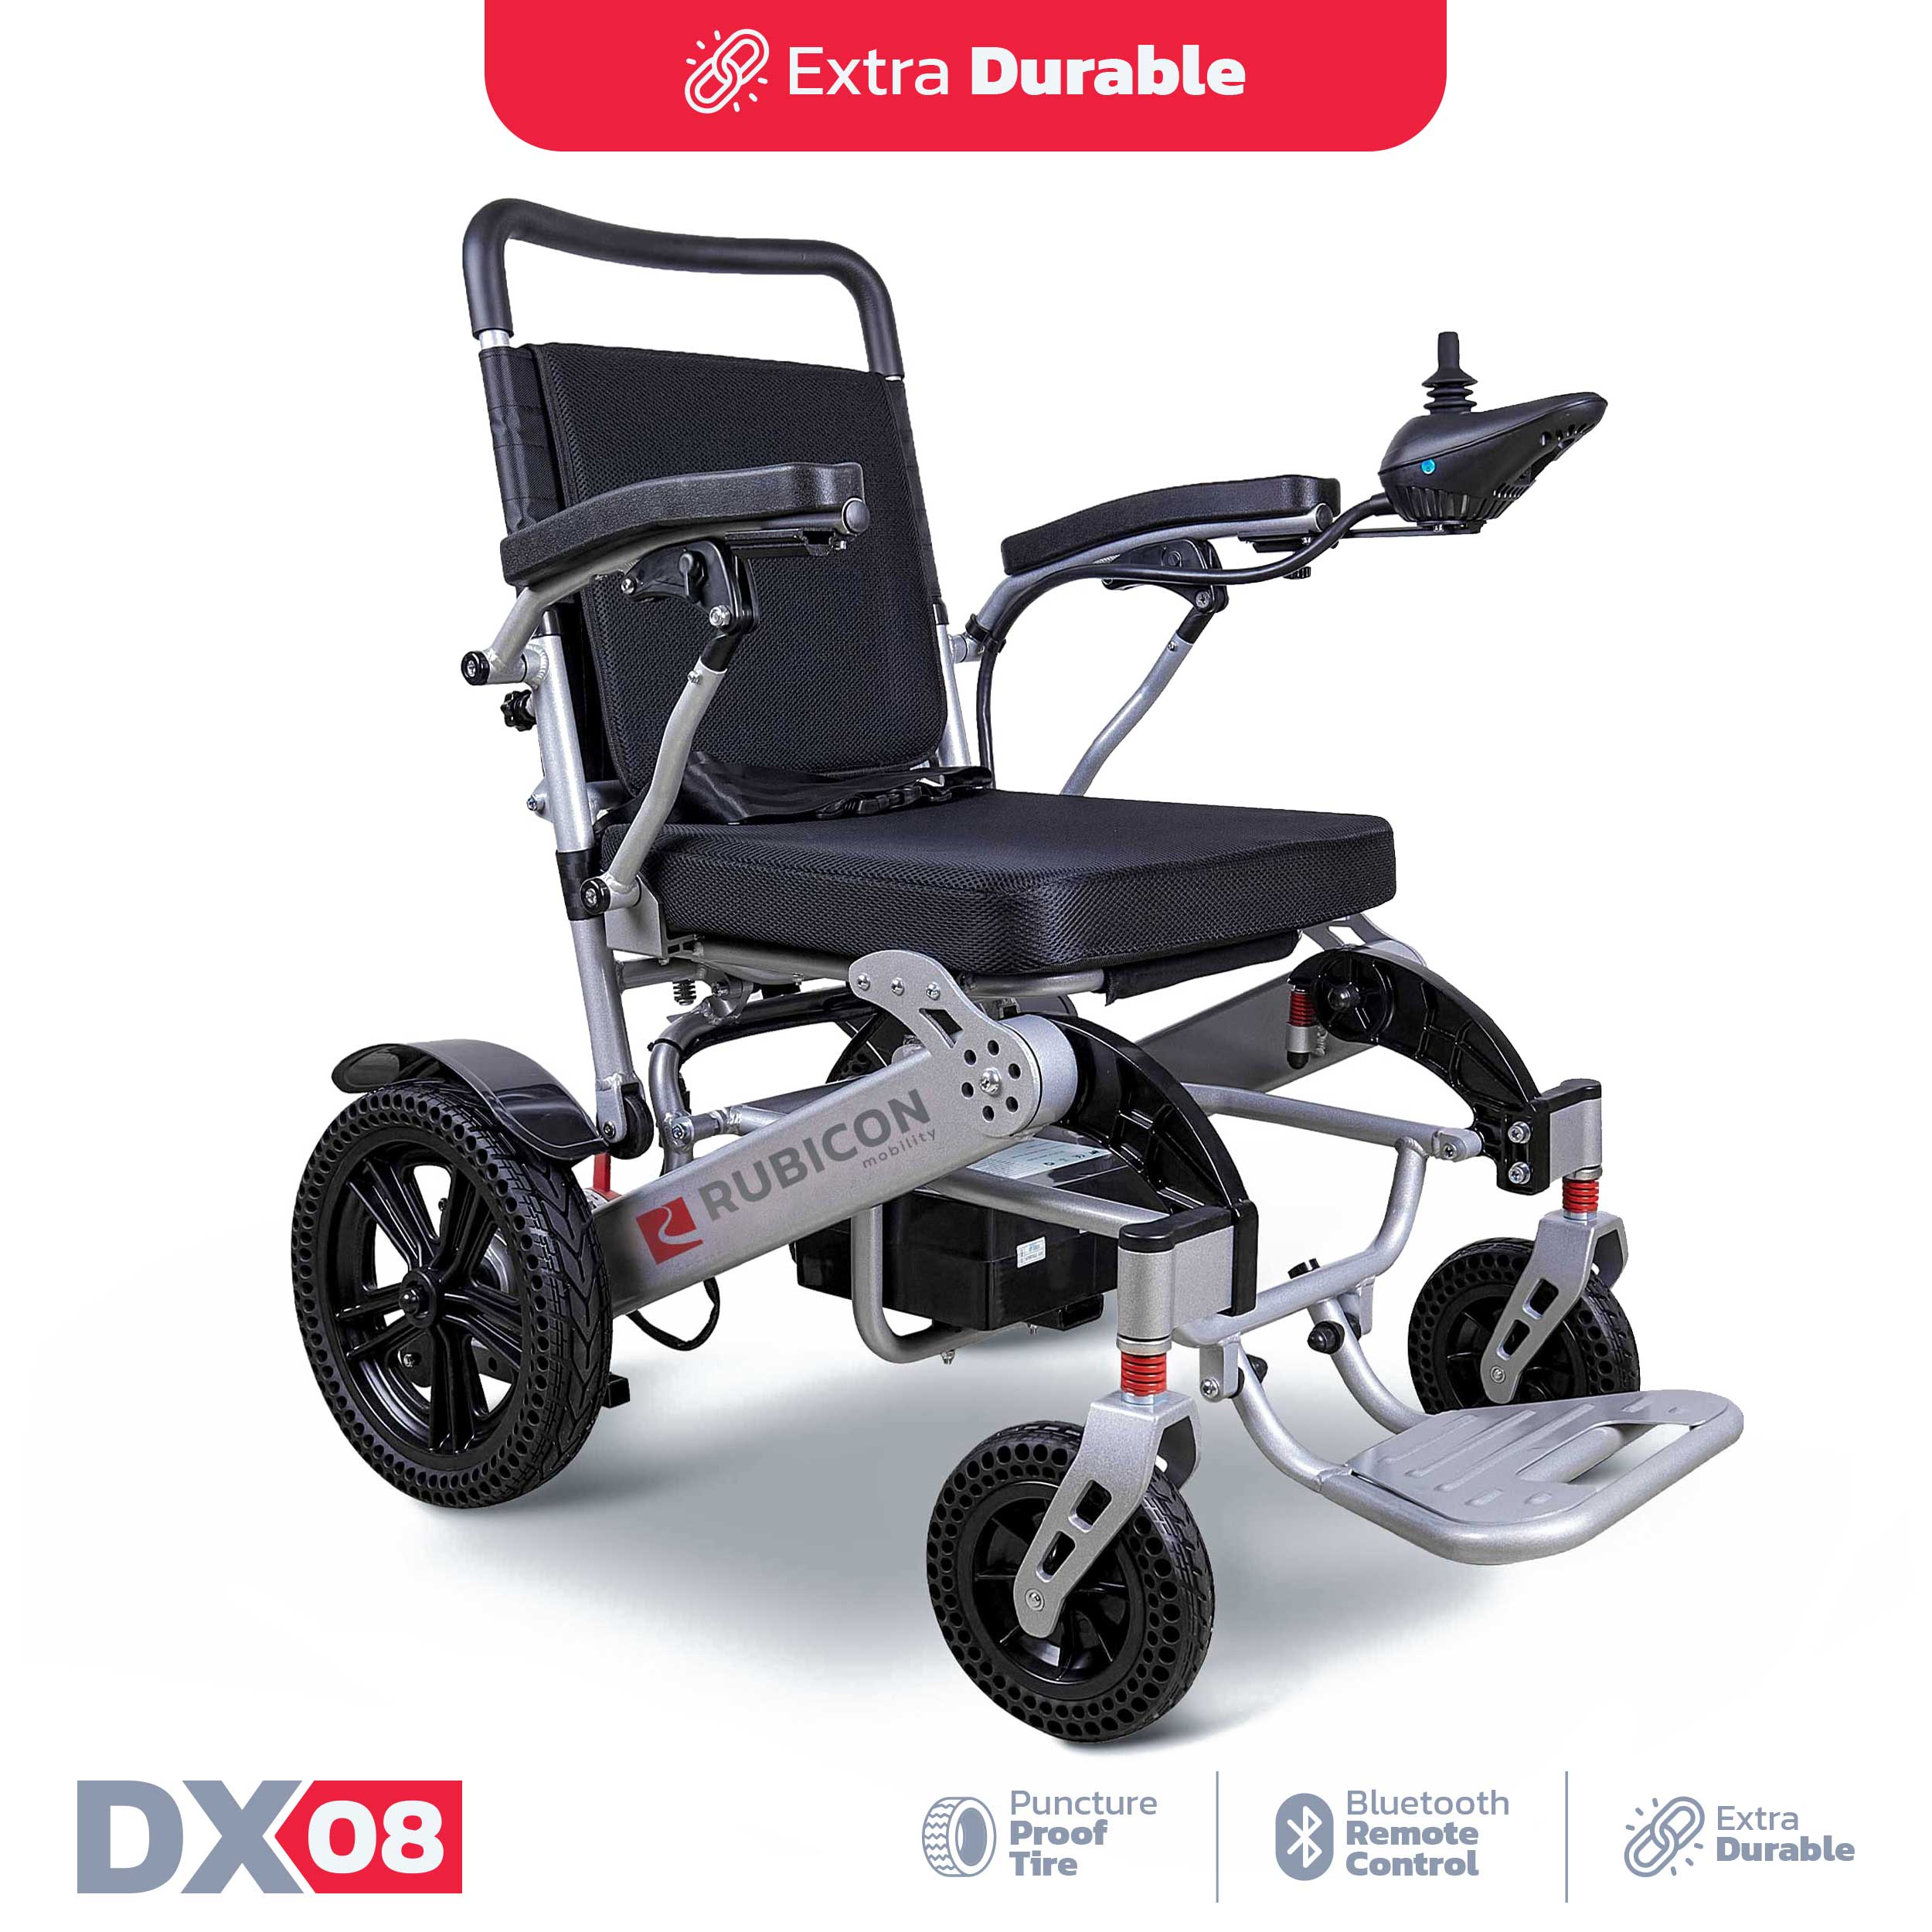 Rubicon DX08 - Extra Durable Electric Wheelchair